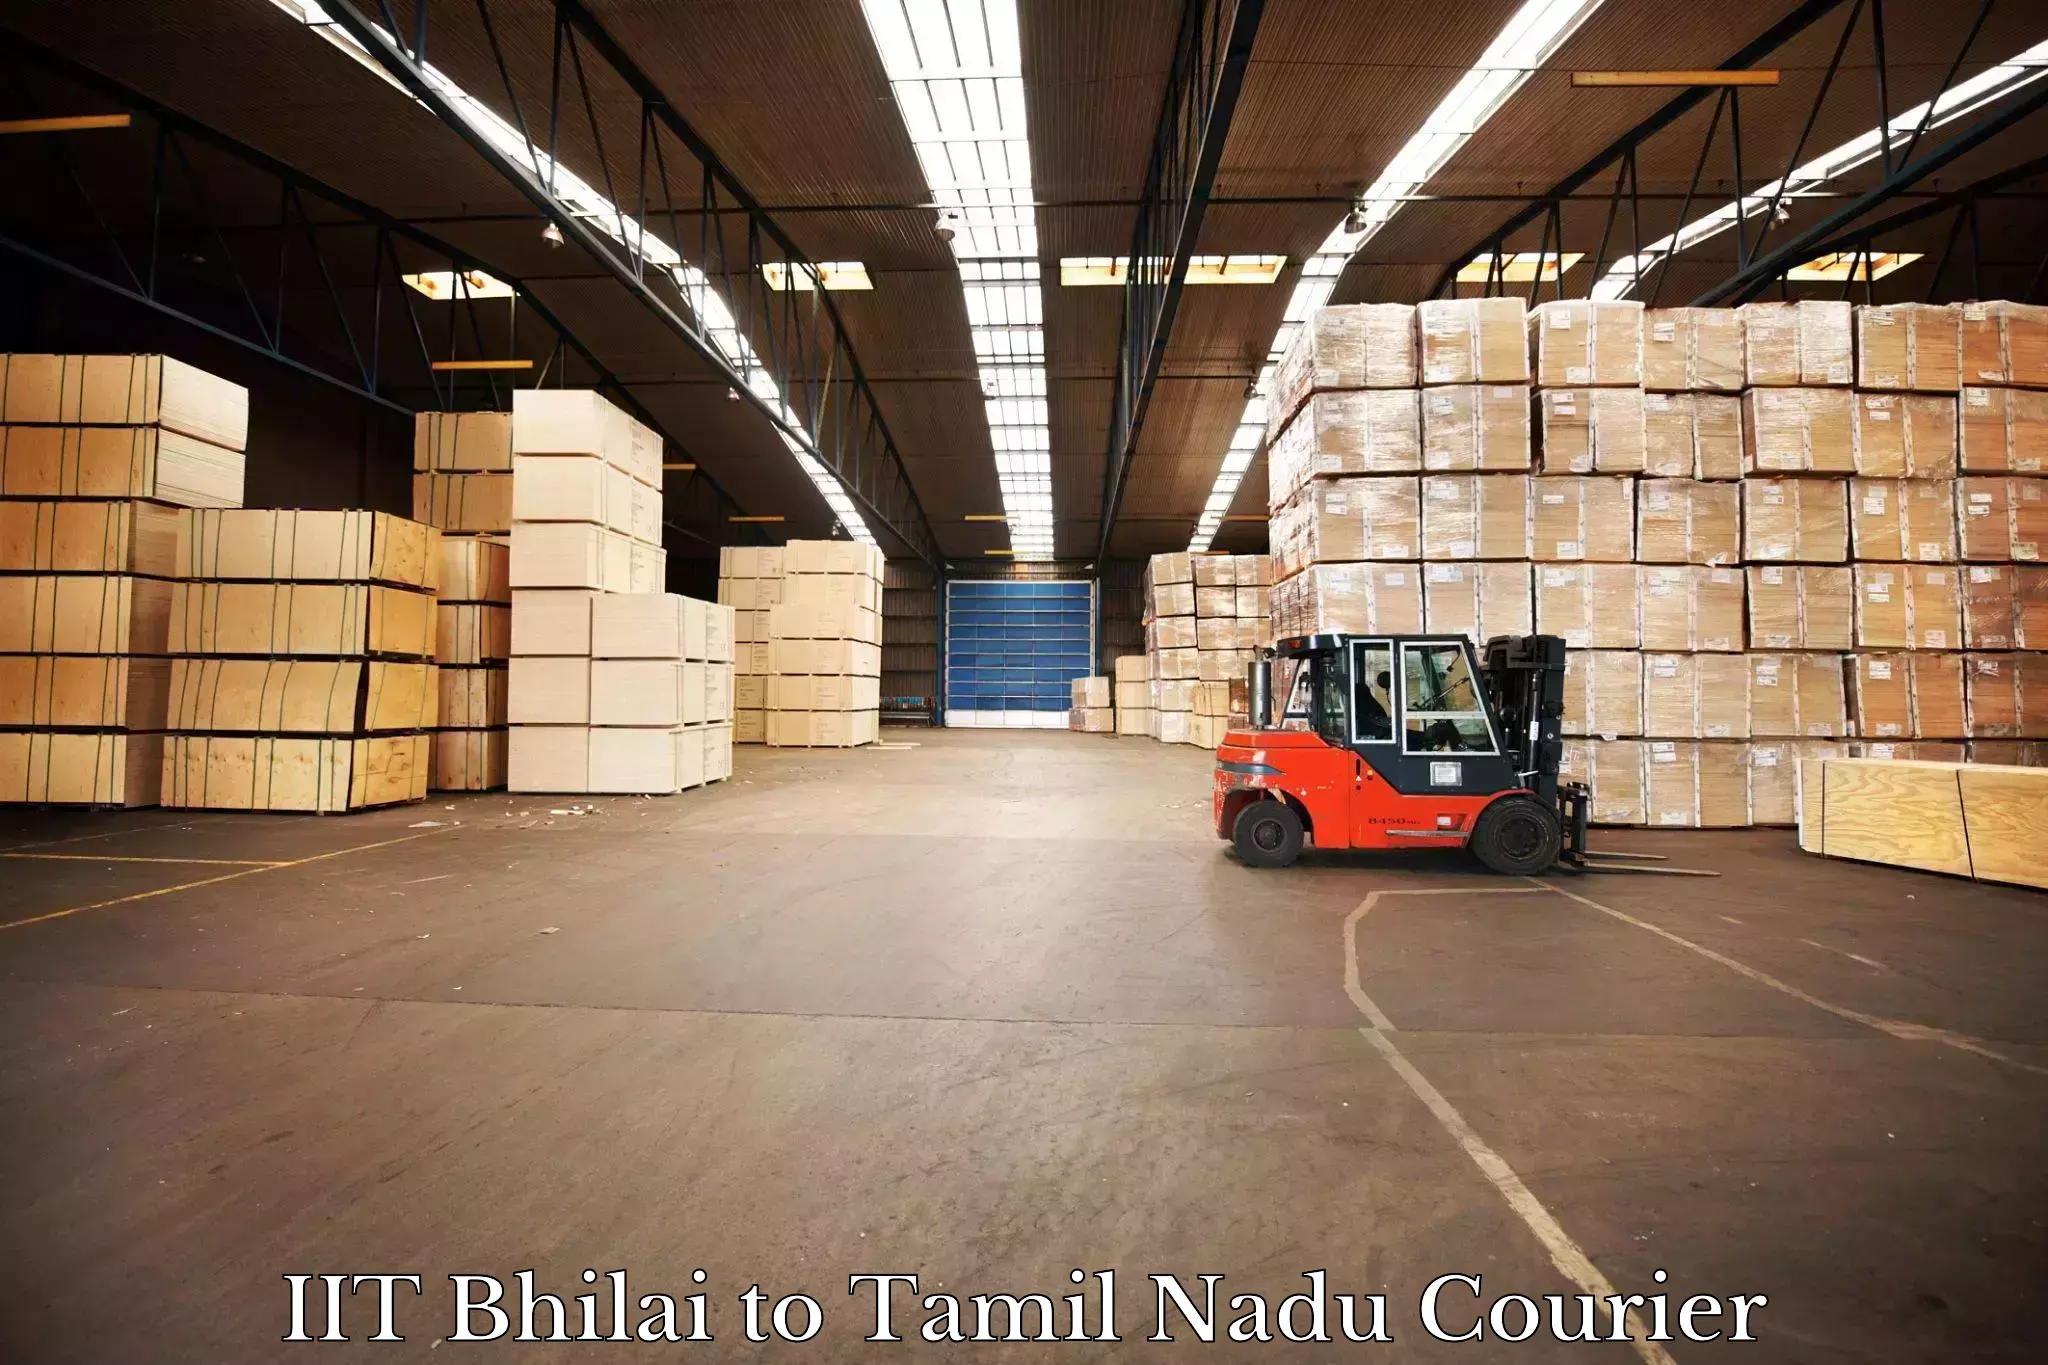 Express delivery capabilities IIT Bhilai to Rameswaram